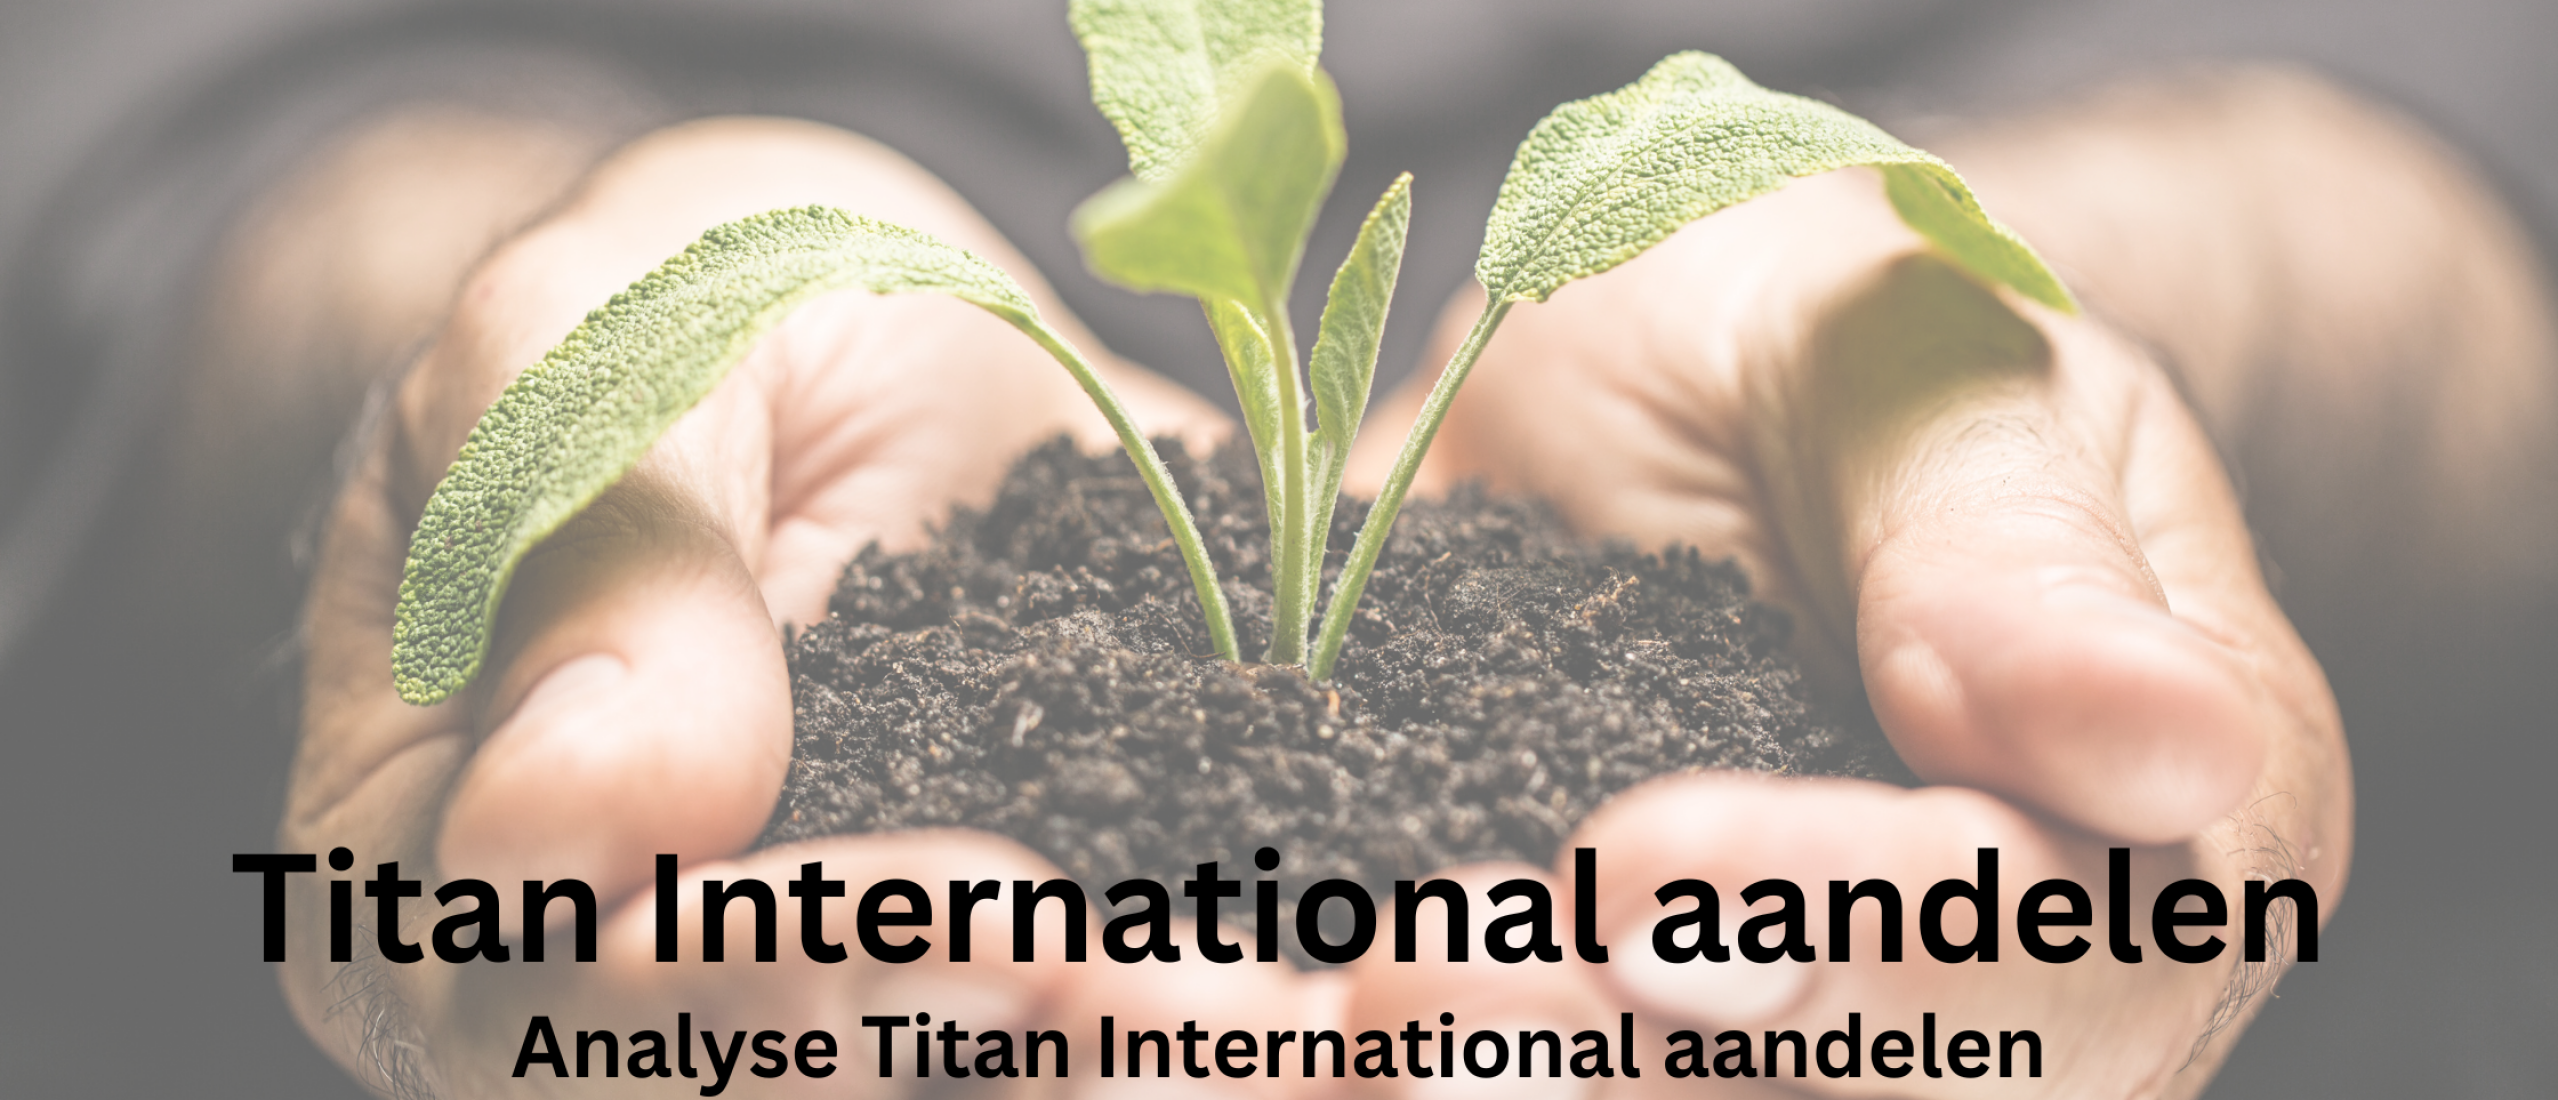 aandelen-analyse-titan-international-